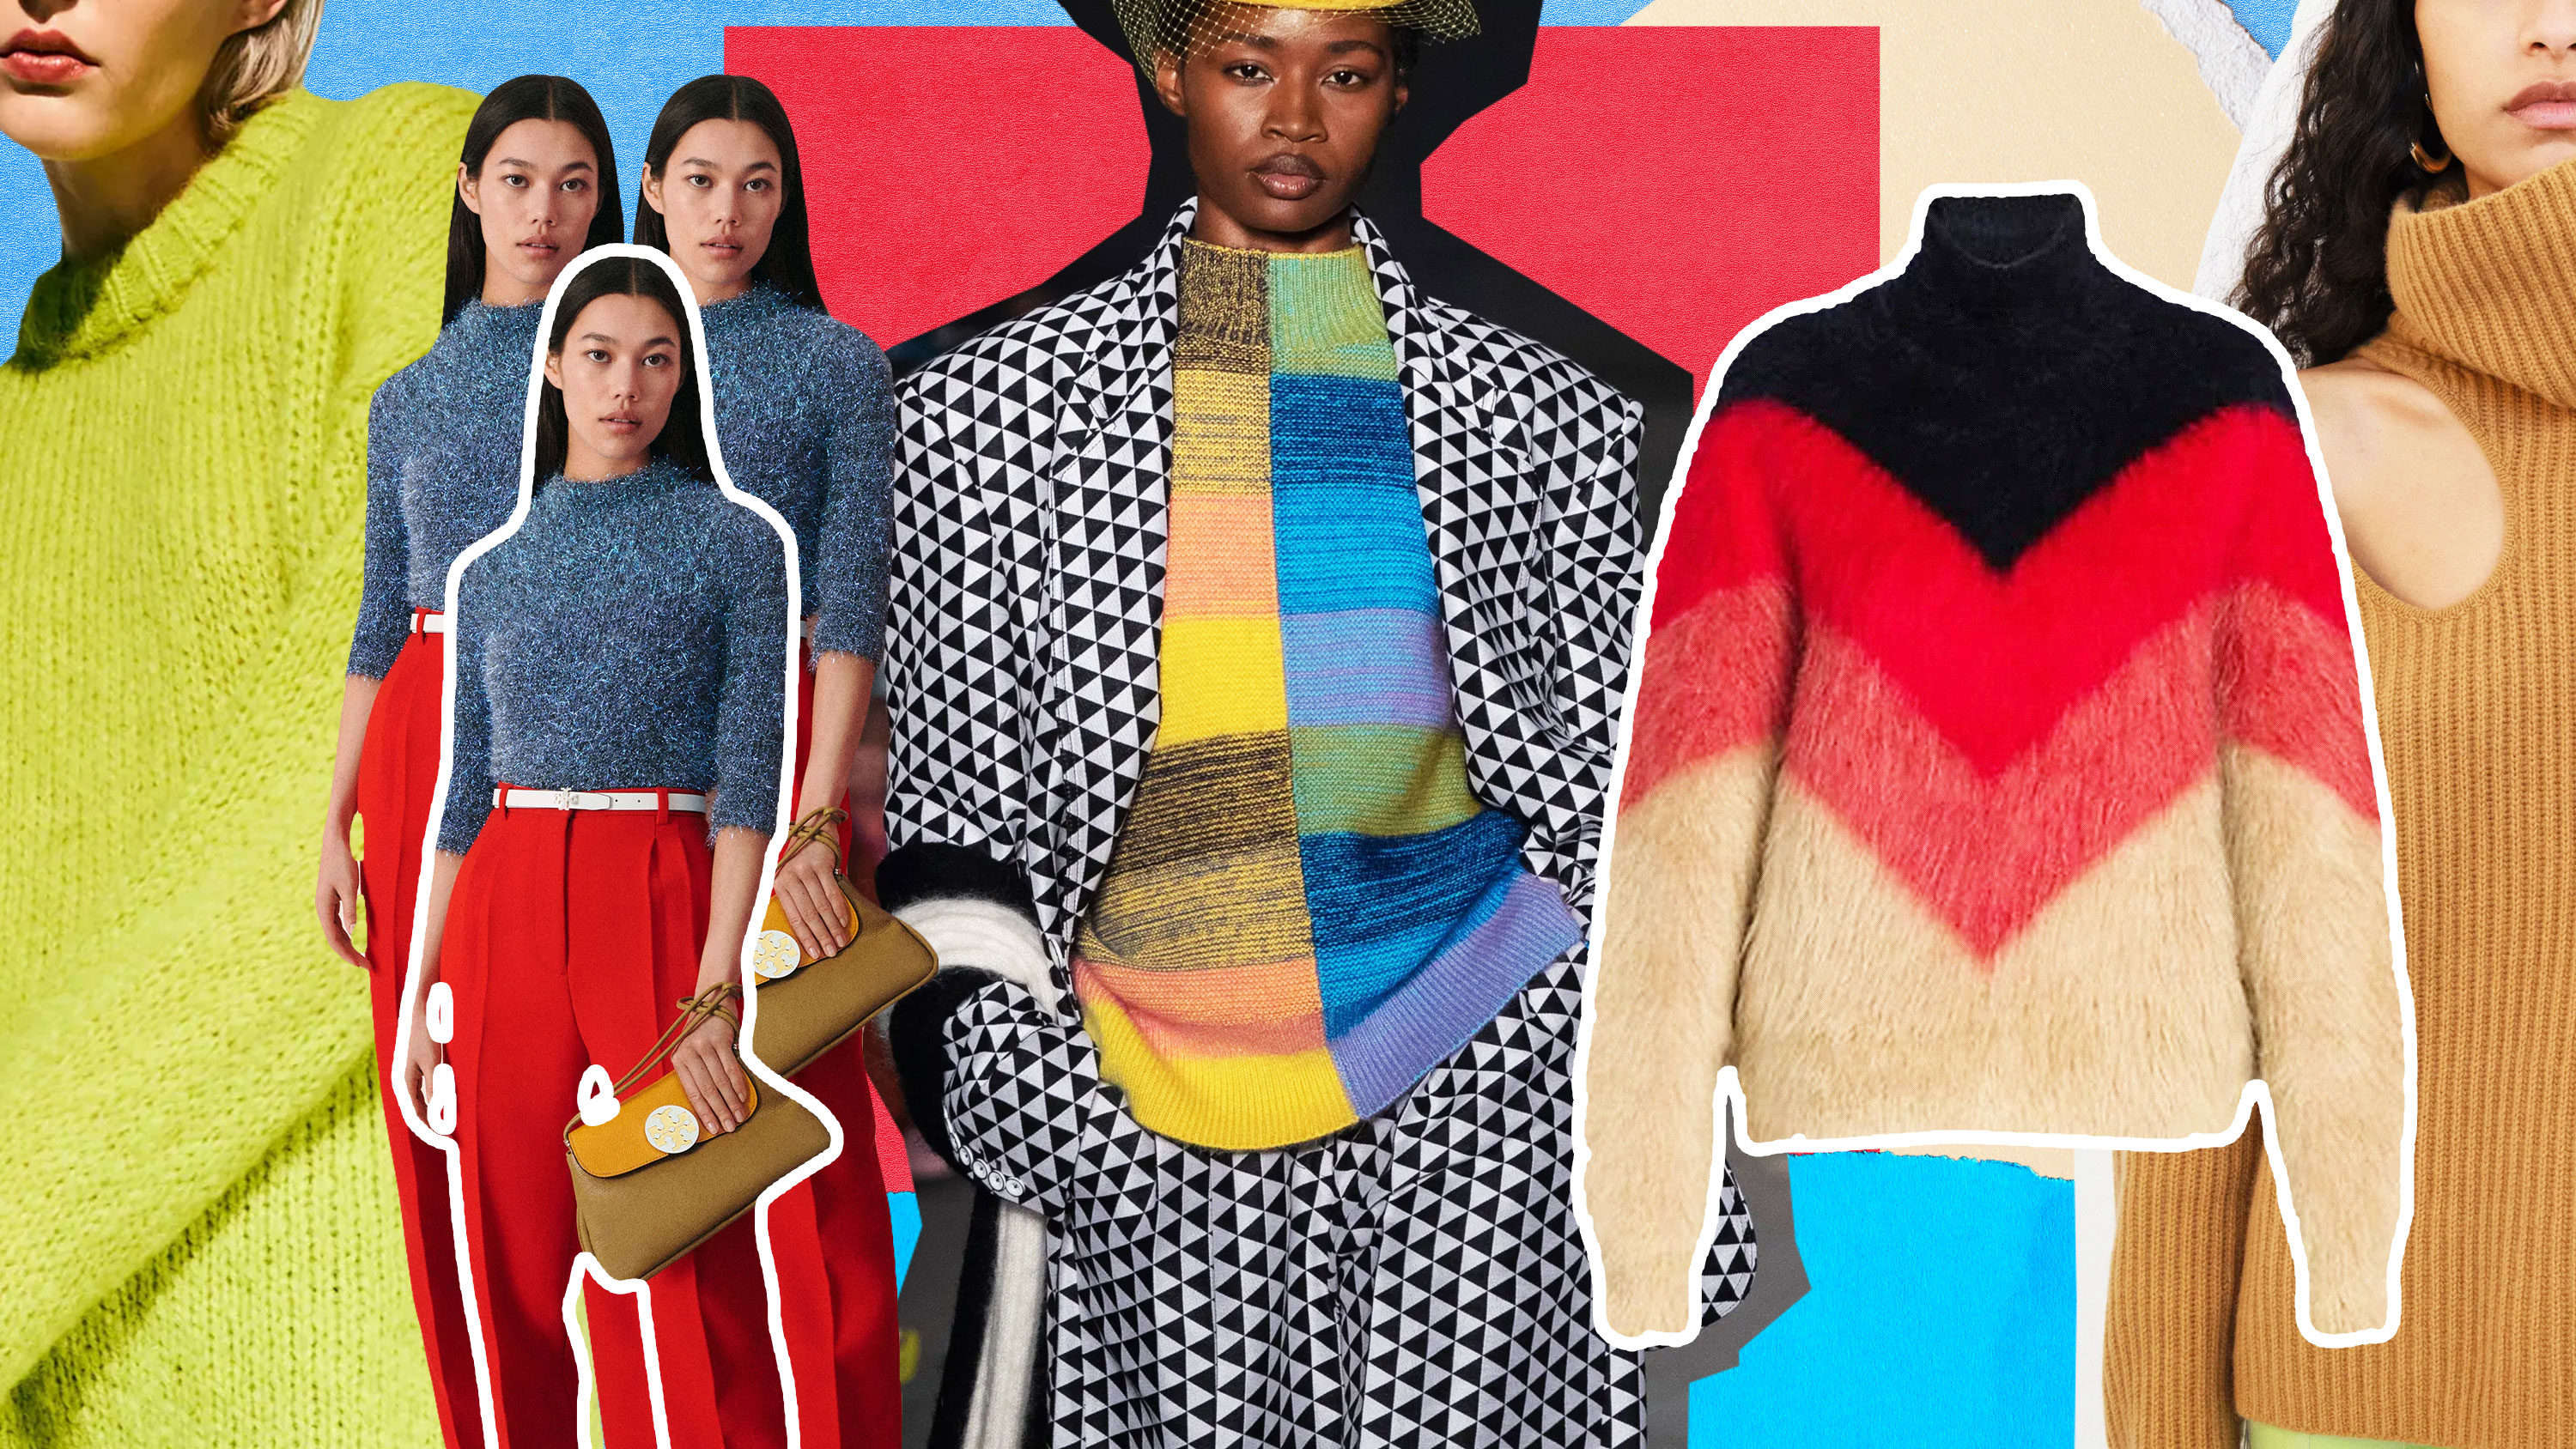 Winter Sweater design Trends 2023 for Girls - Stylespk